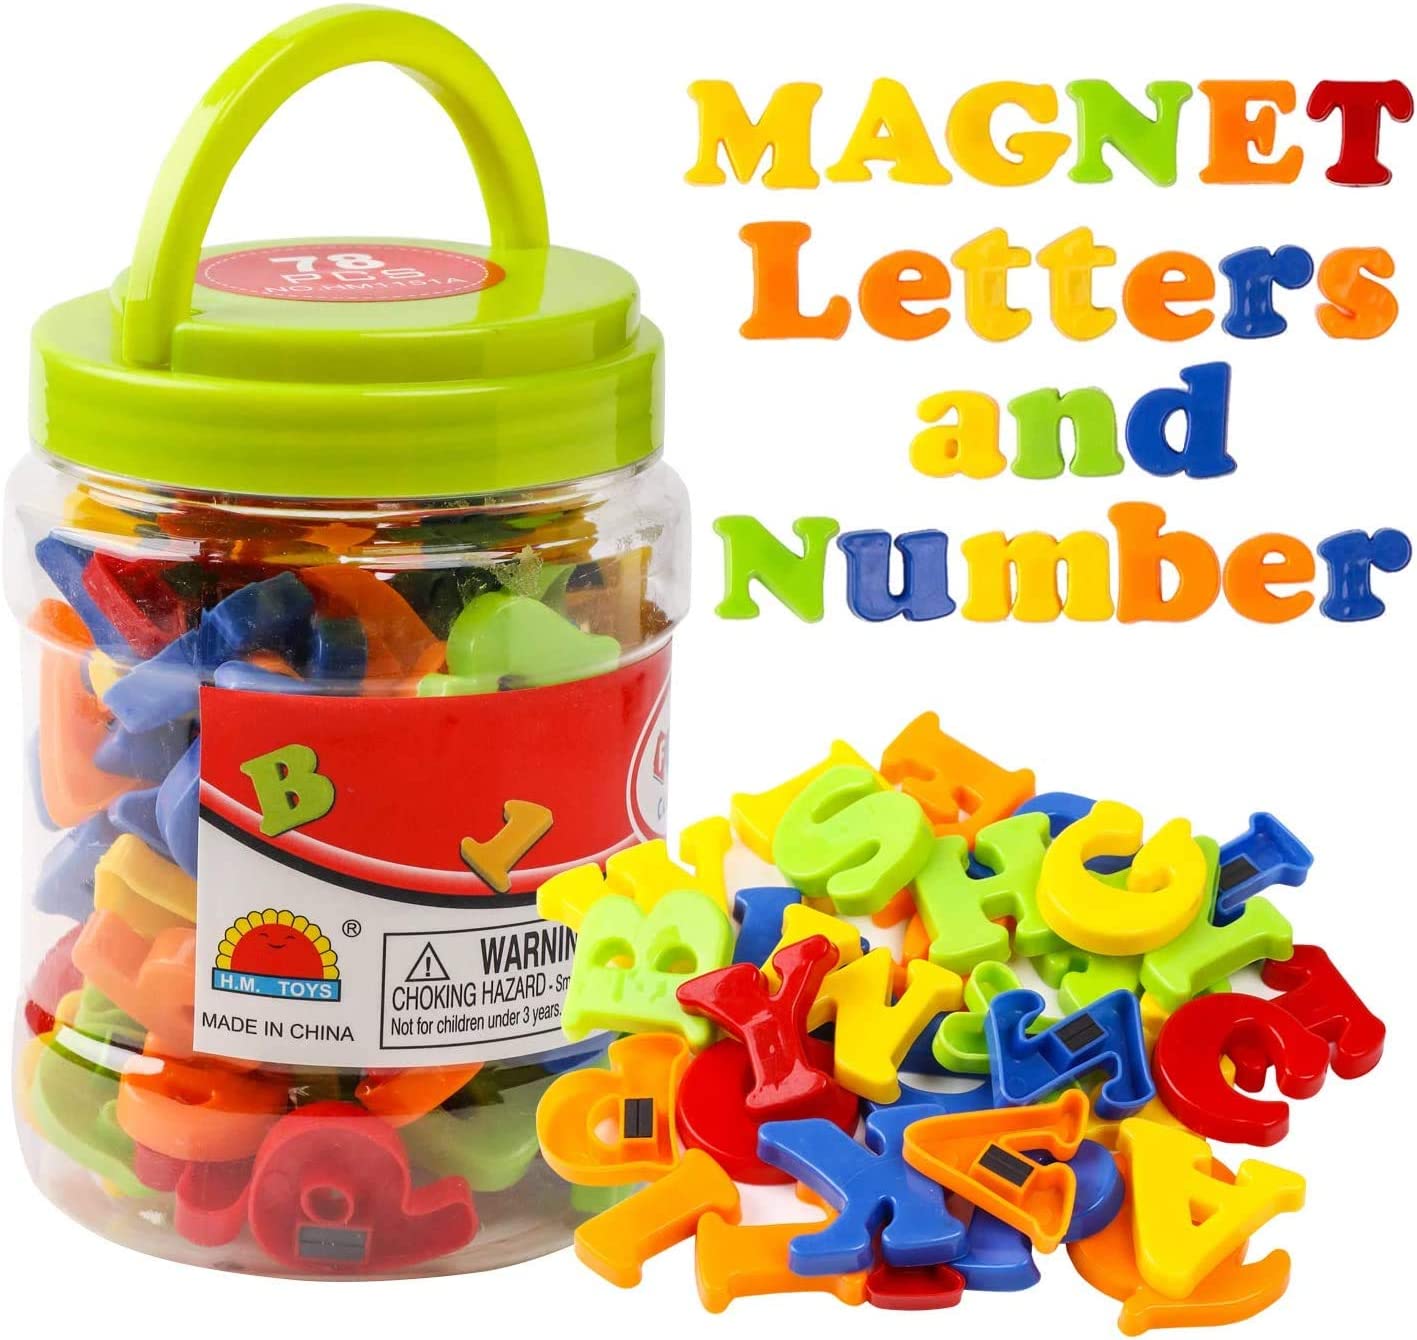 RAEQKS Children’s Alphabetical Refrigerator Magnets, 123-Count